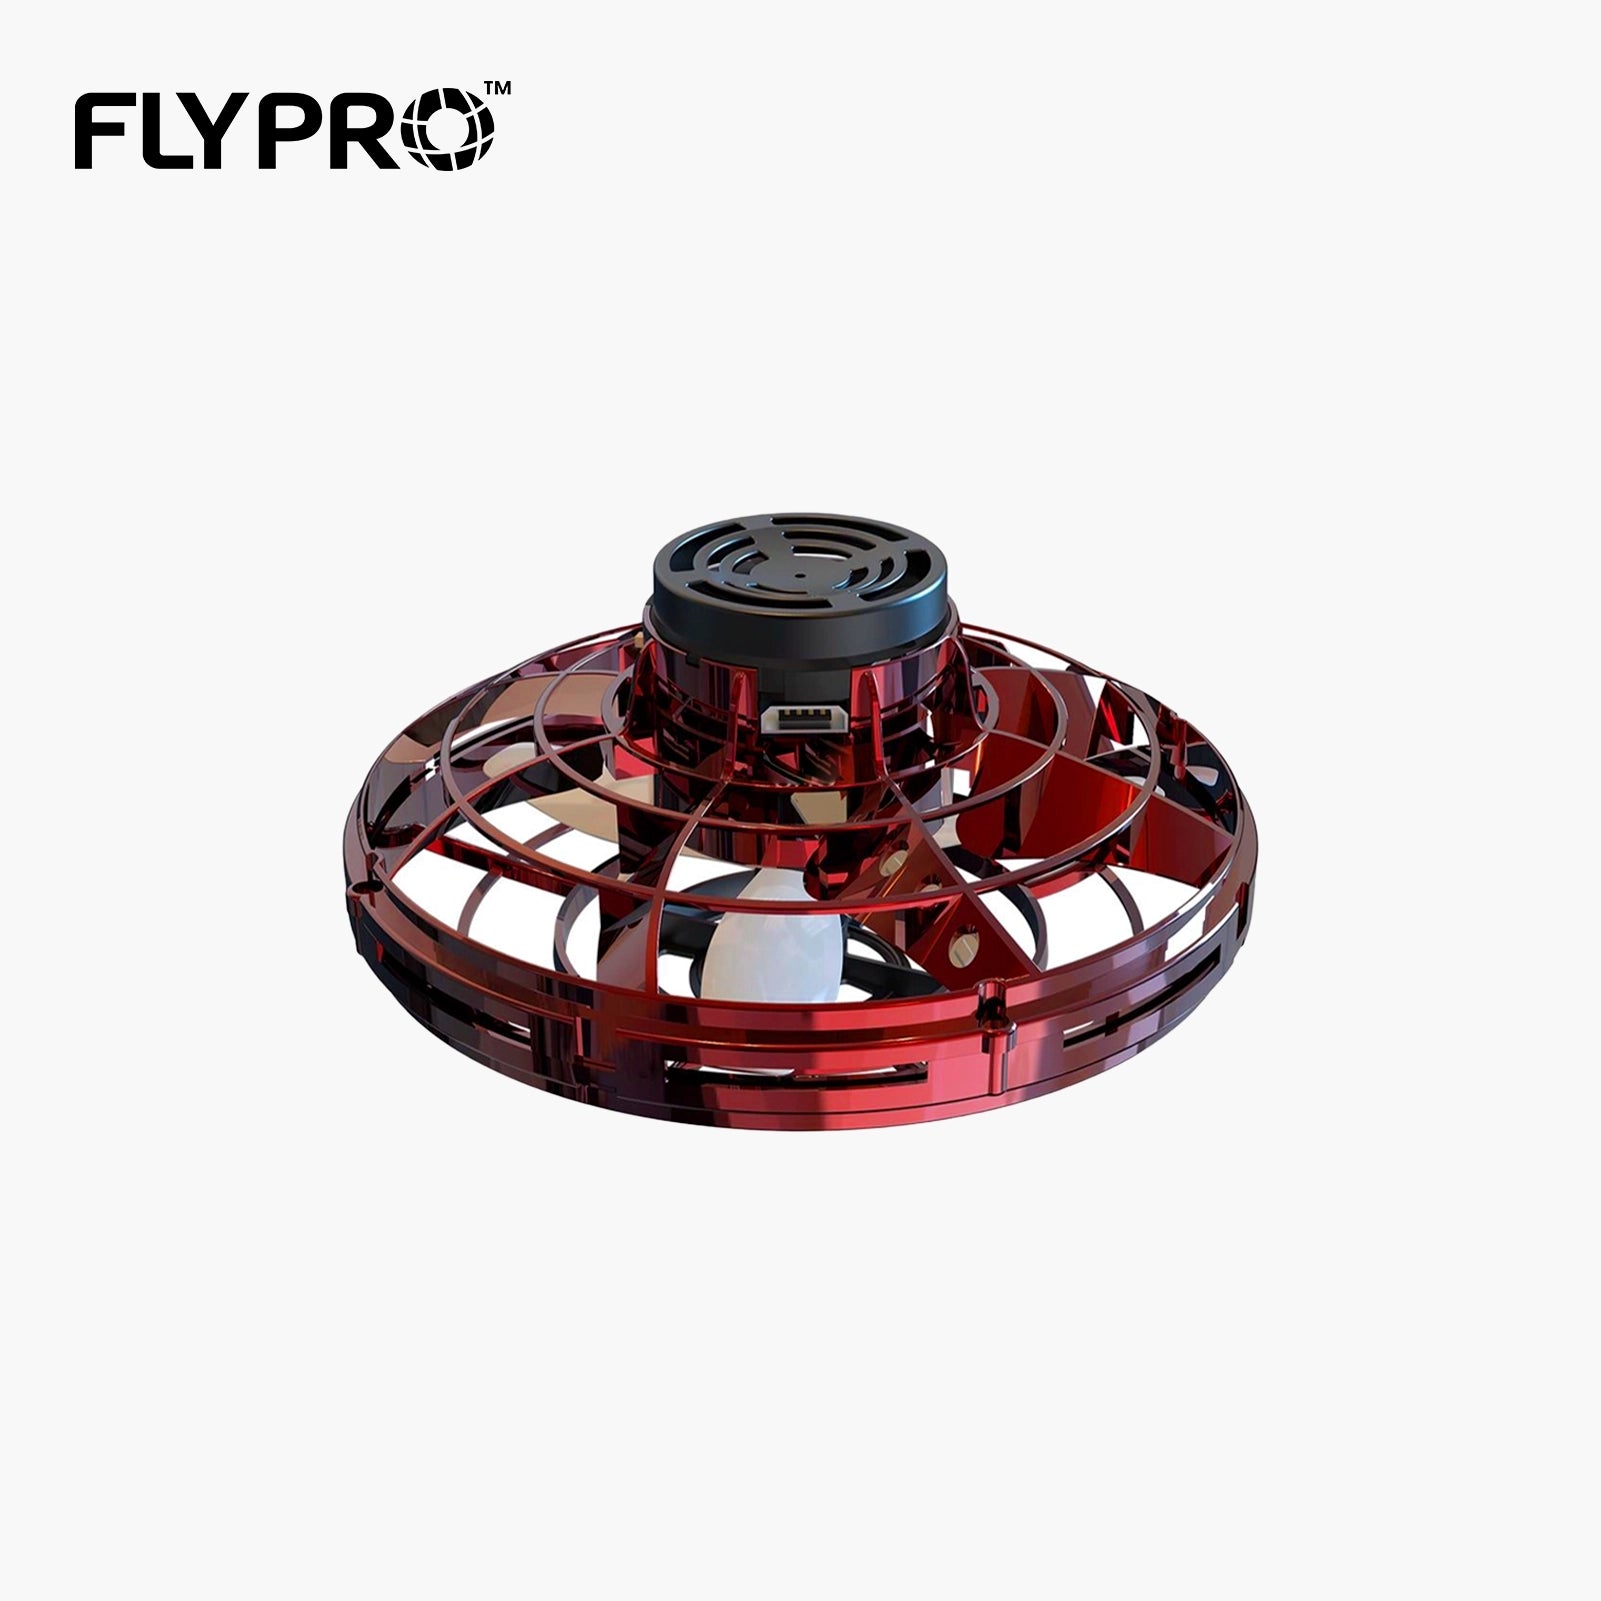 FlyPro™ UFO Magic Flying Spinner